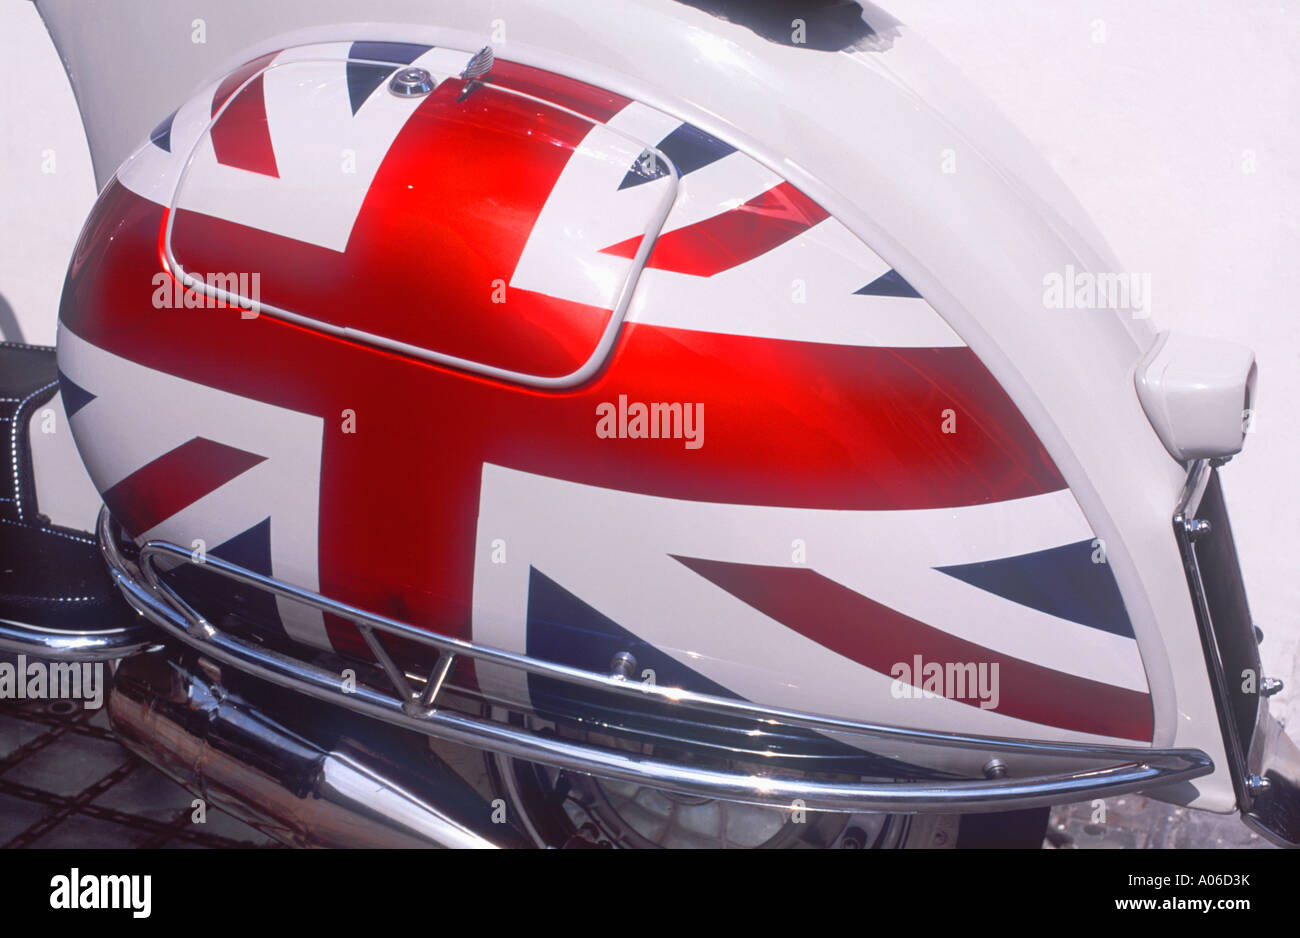 Union Jack flag painted on side panel of Piaggio Vespa motor scooter, London, England Stock Photo